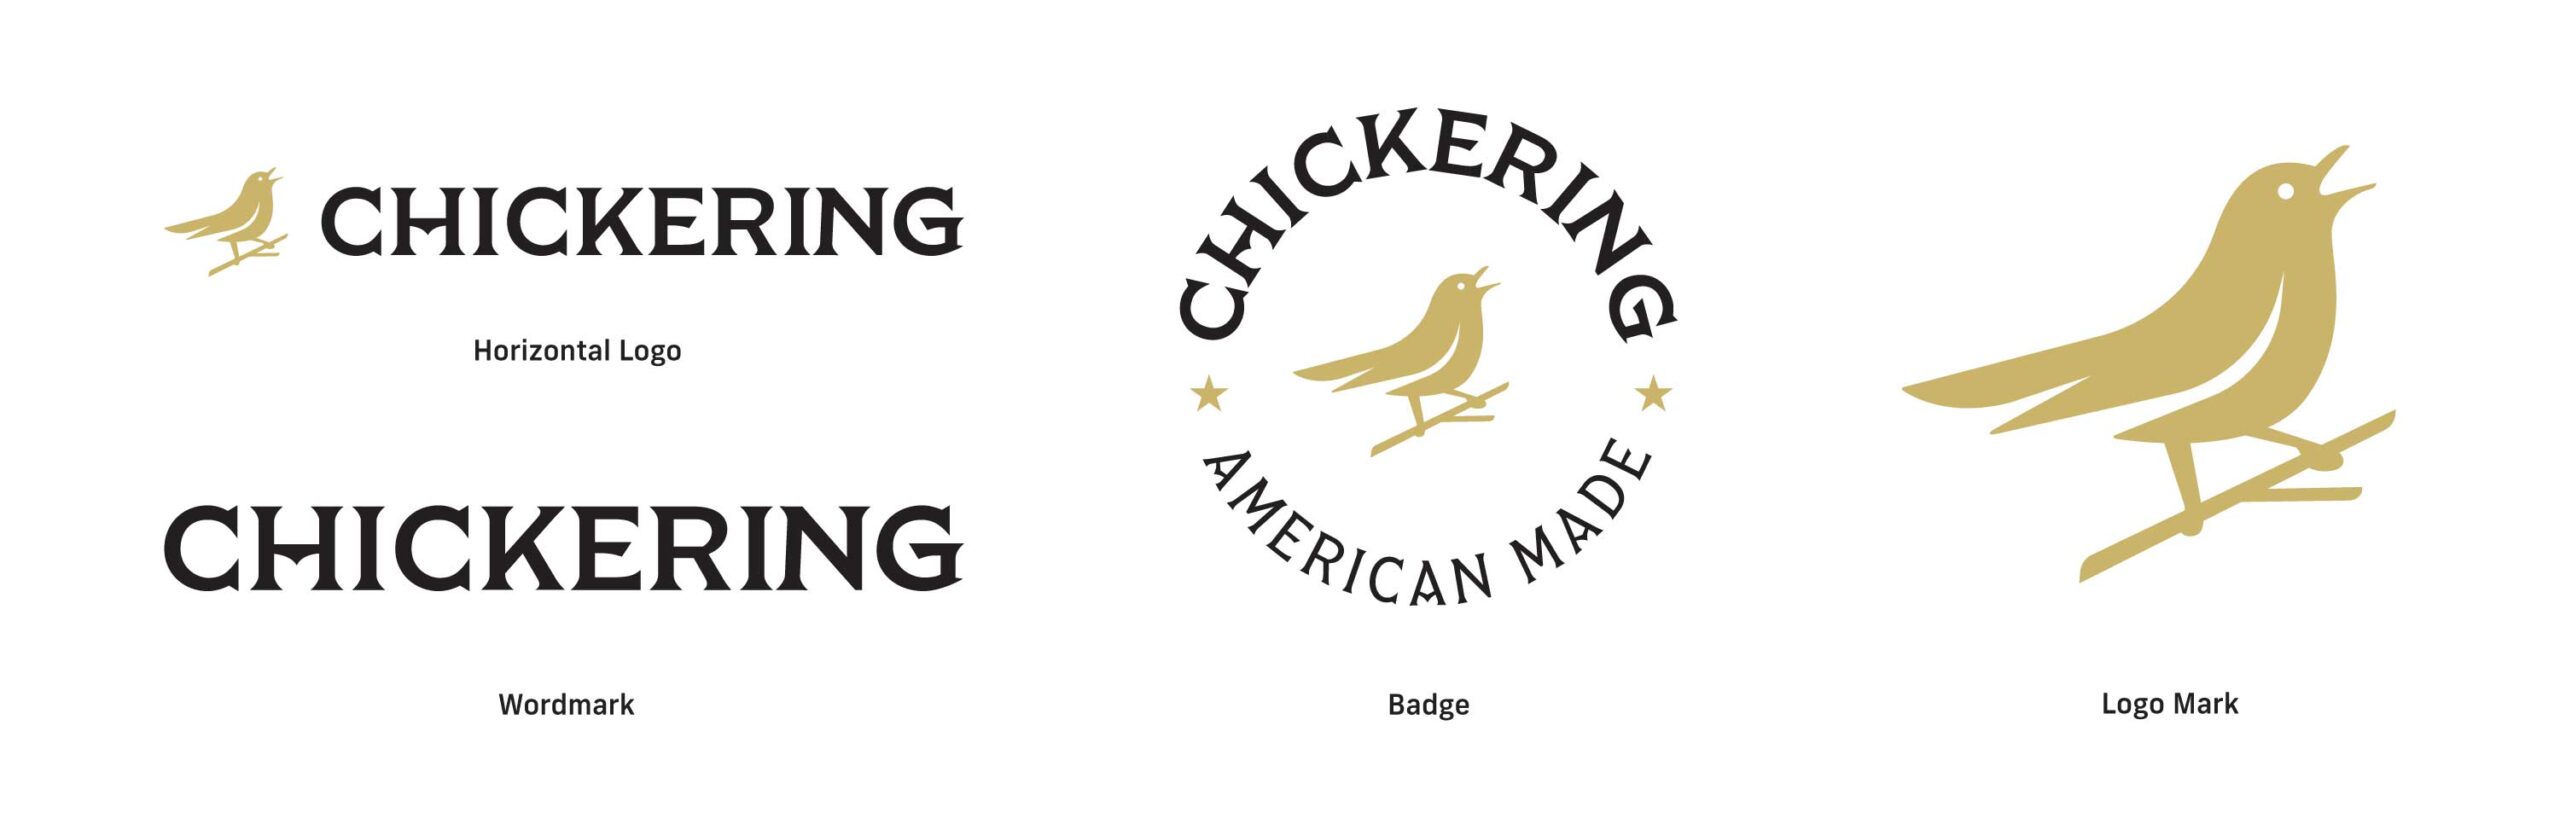 Chickering-logo-versions